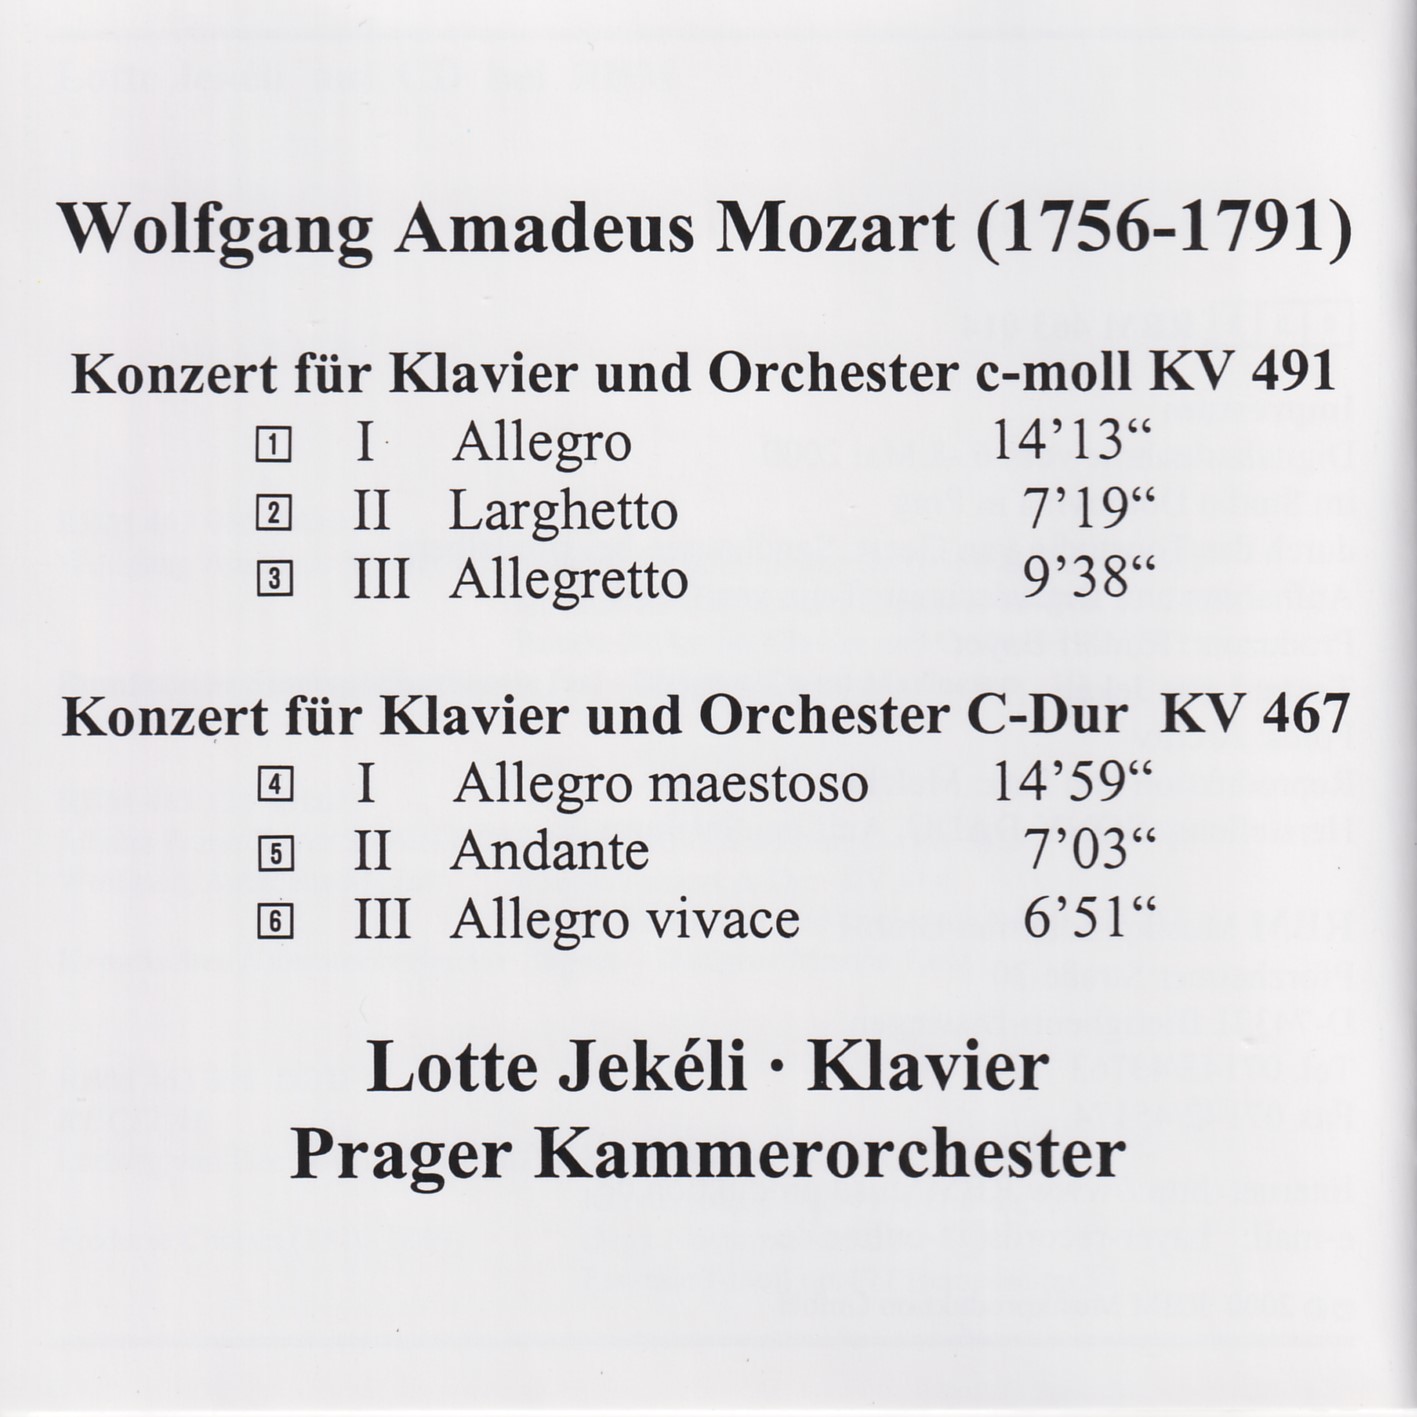 Lotte Jekéli spielt Mozart